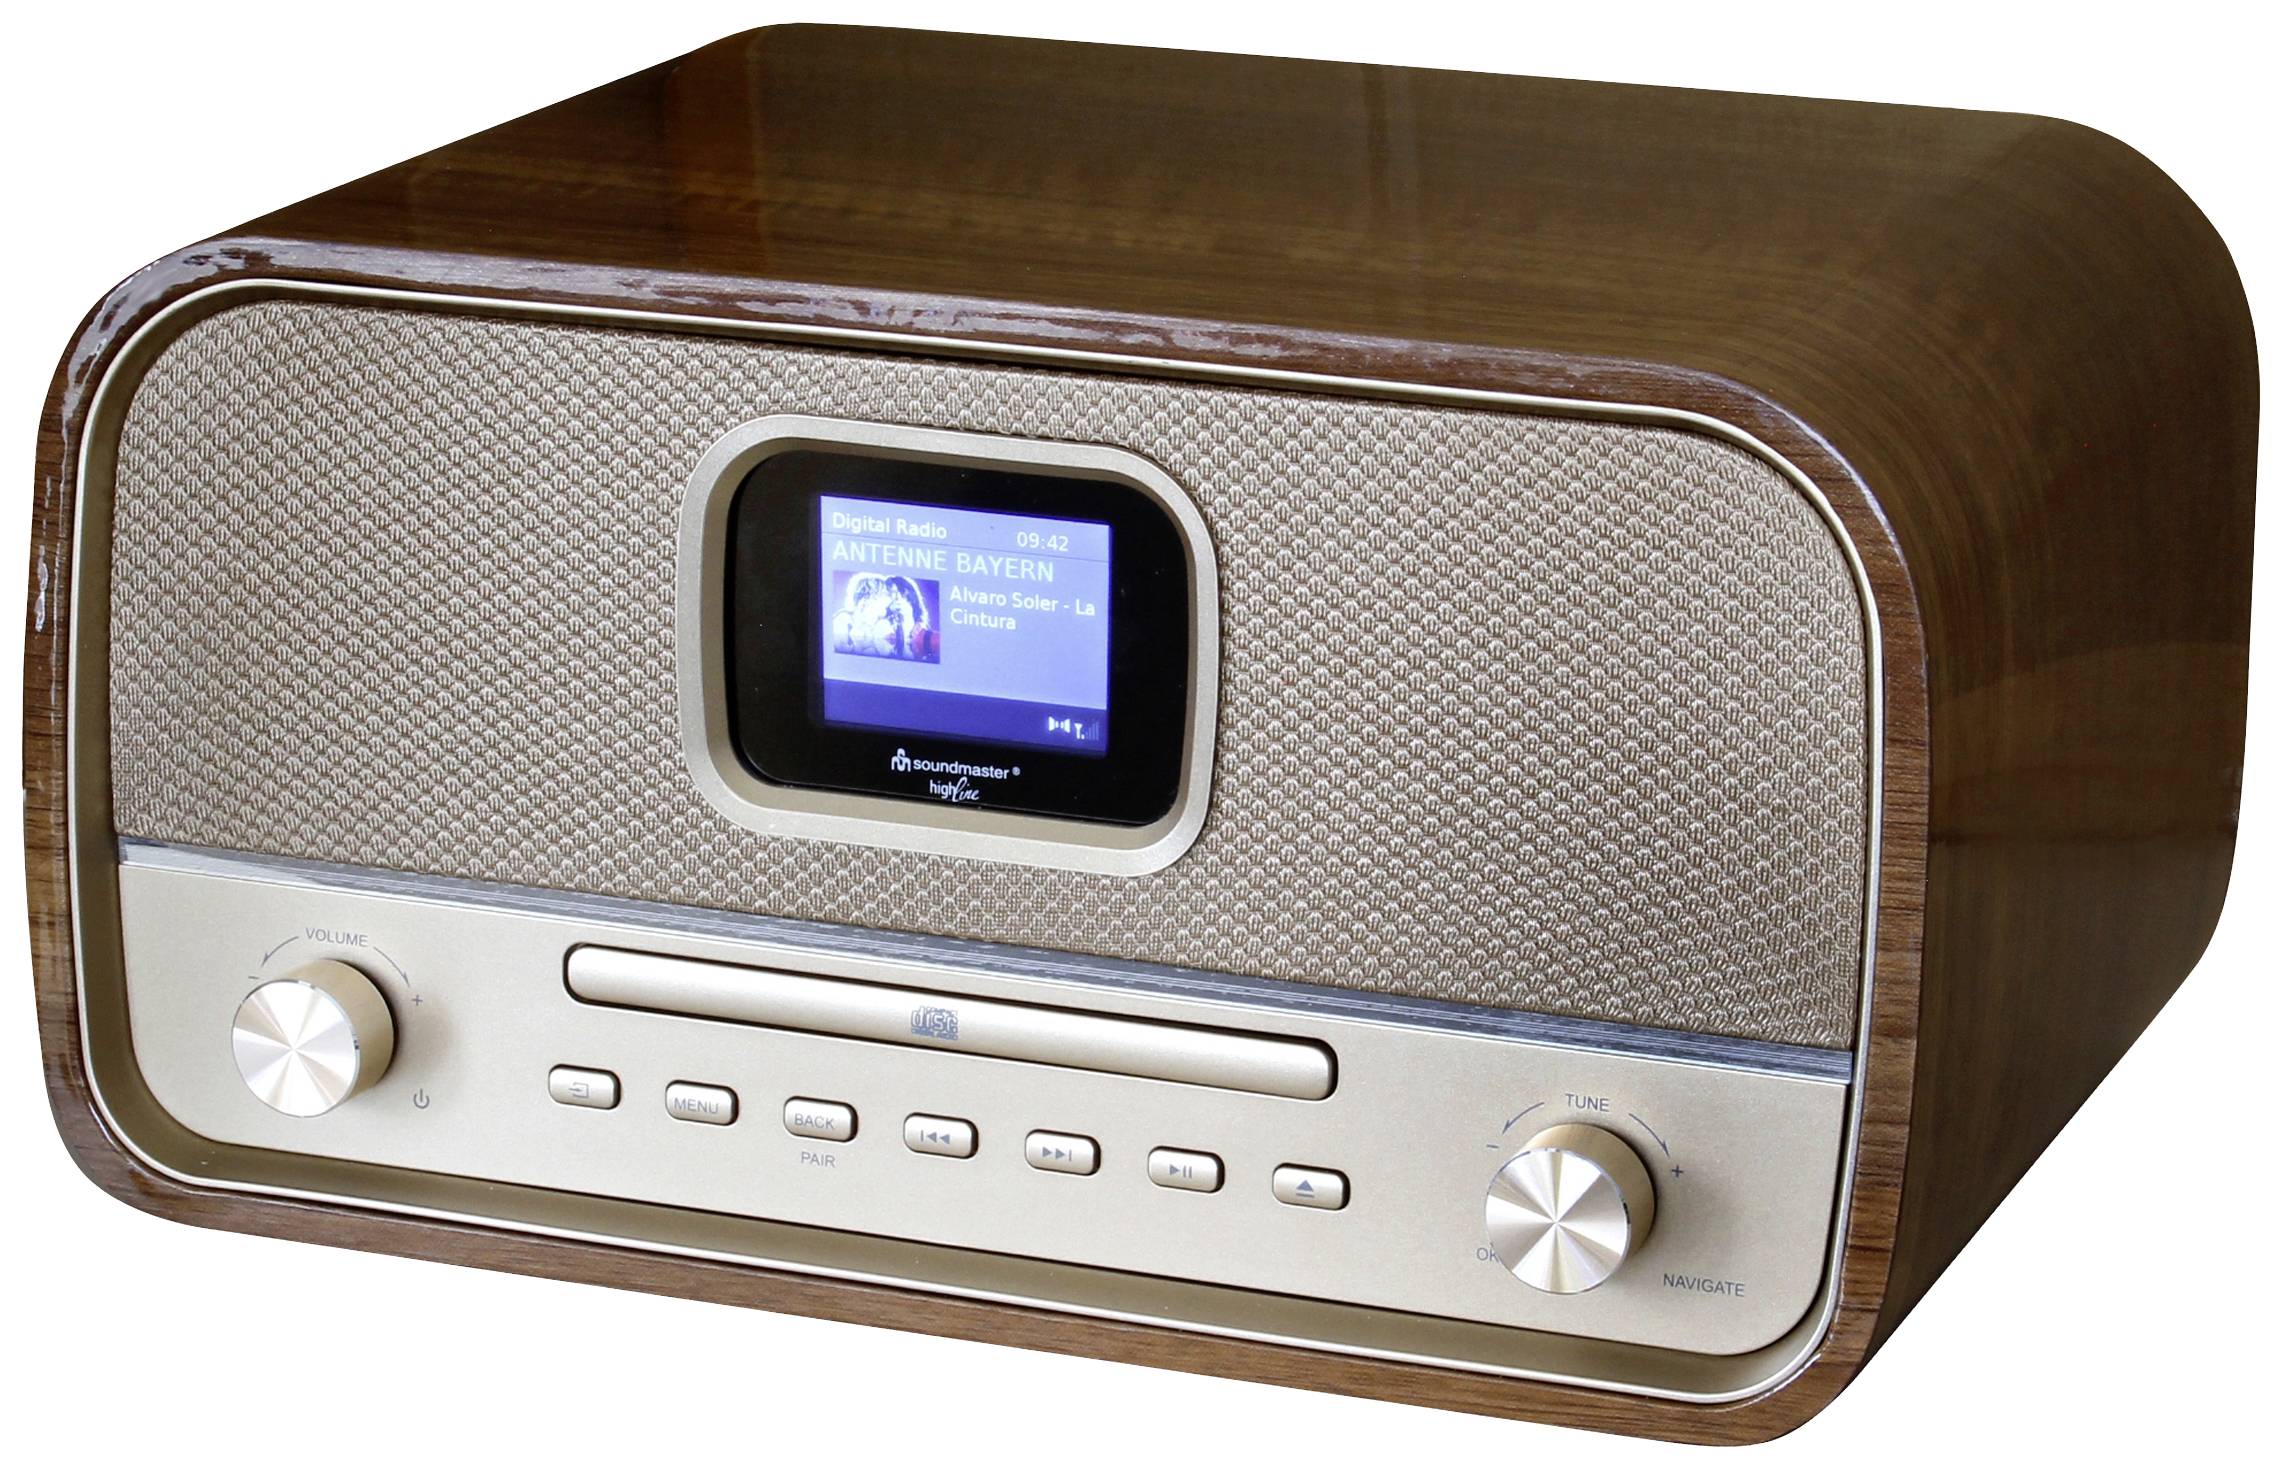 soundmaster Desk radio DAB+, FM AUX, Bluetooth, CD, USB Battery charger, Incl. remote control, Alarm clock Br | Conrad.com